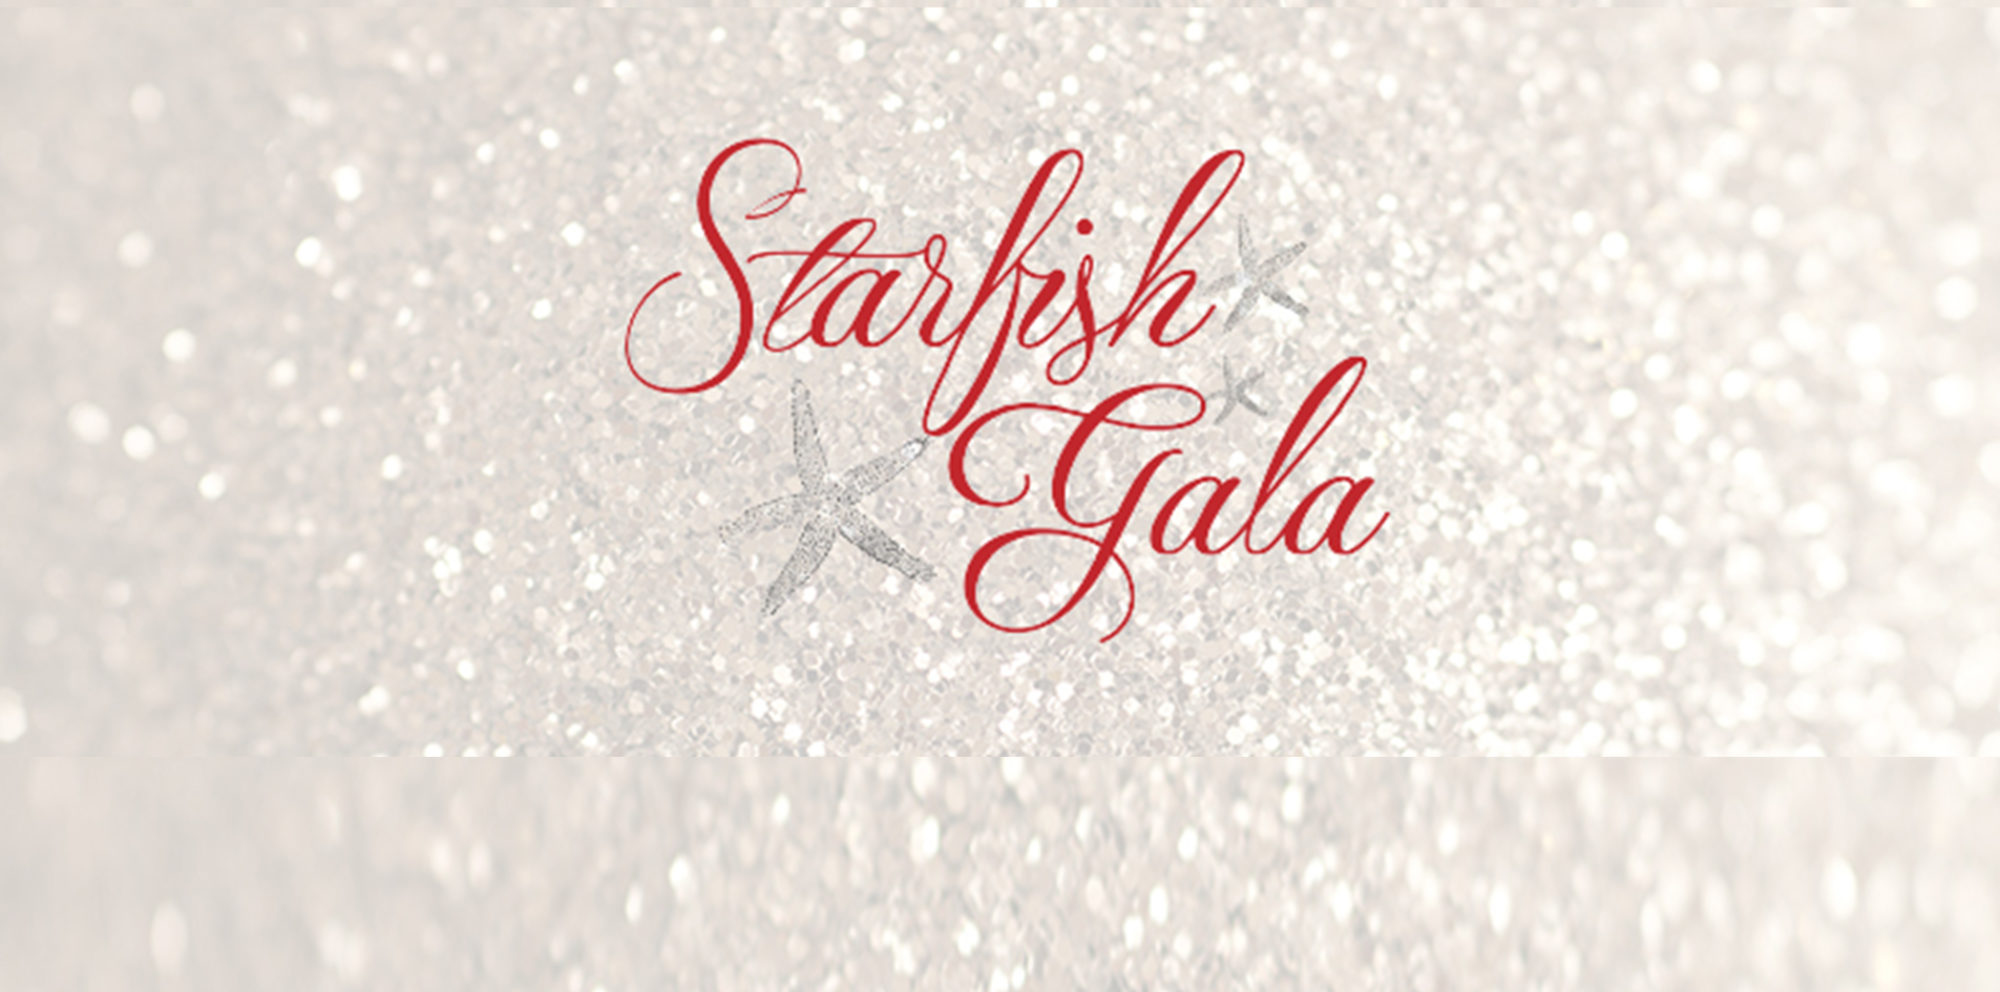 Starfish Gala Tickets